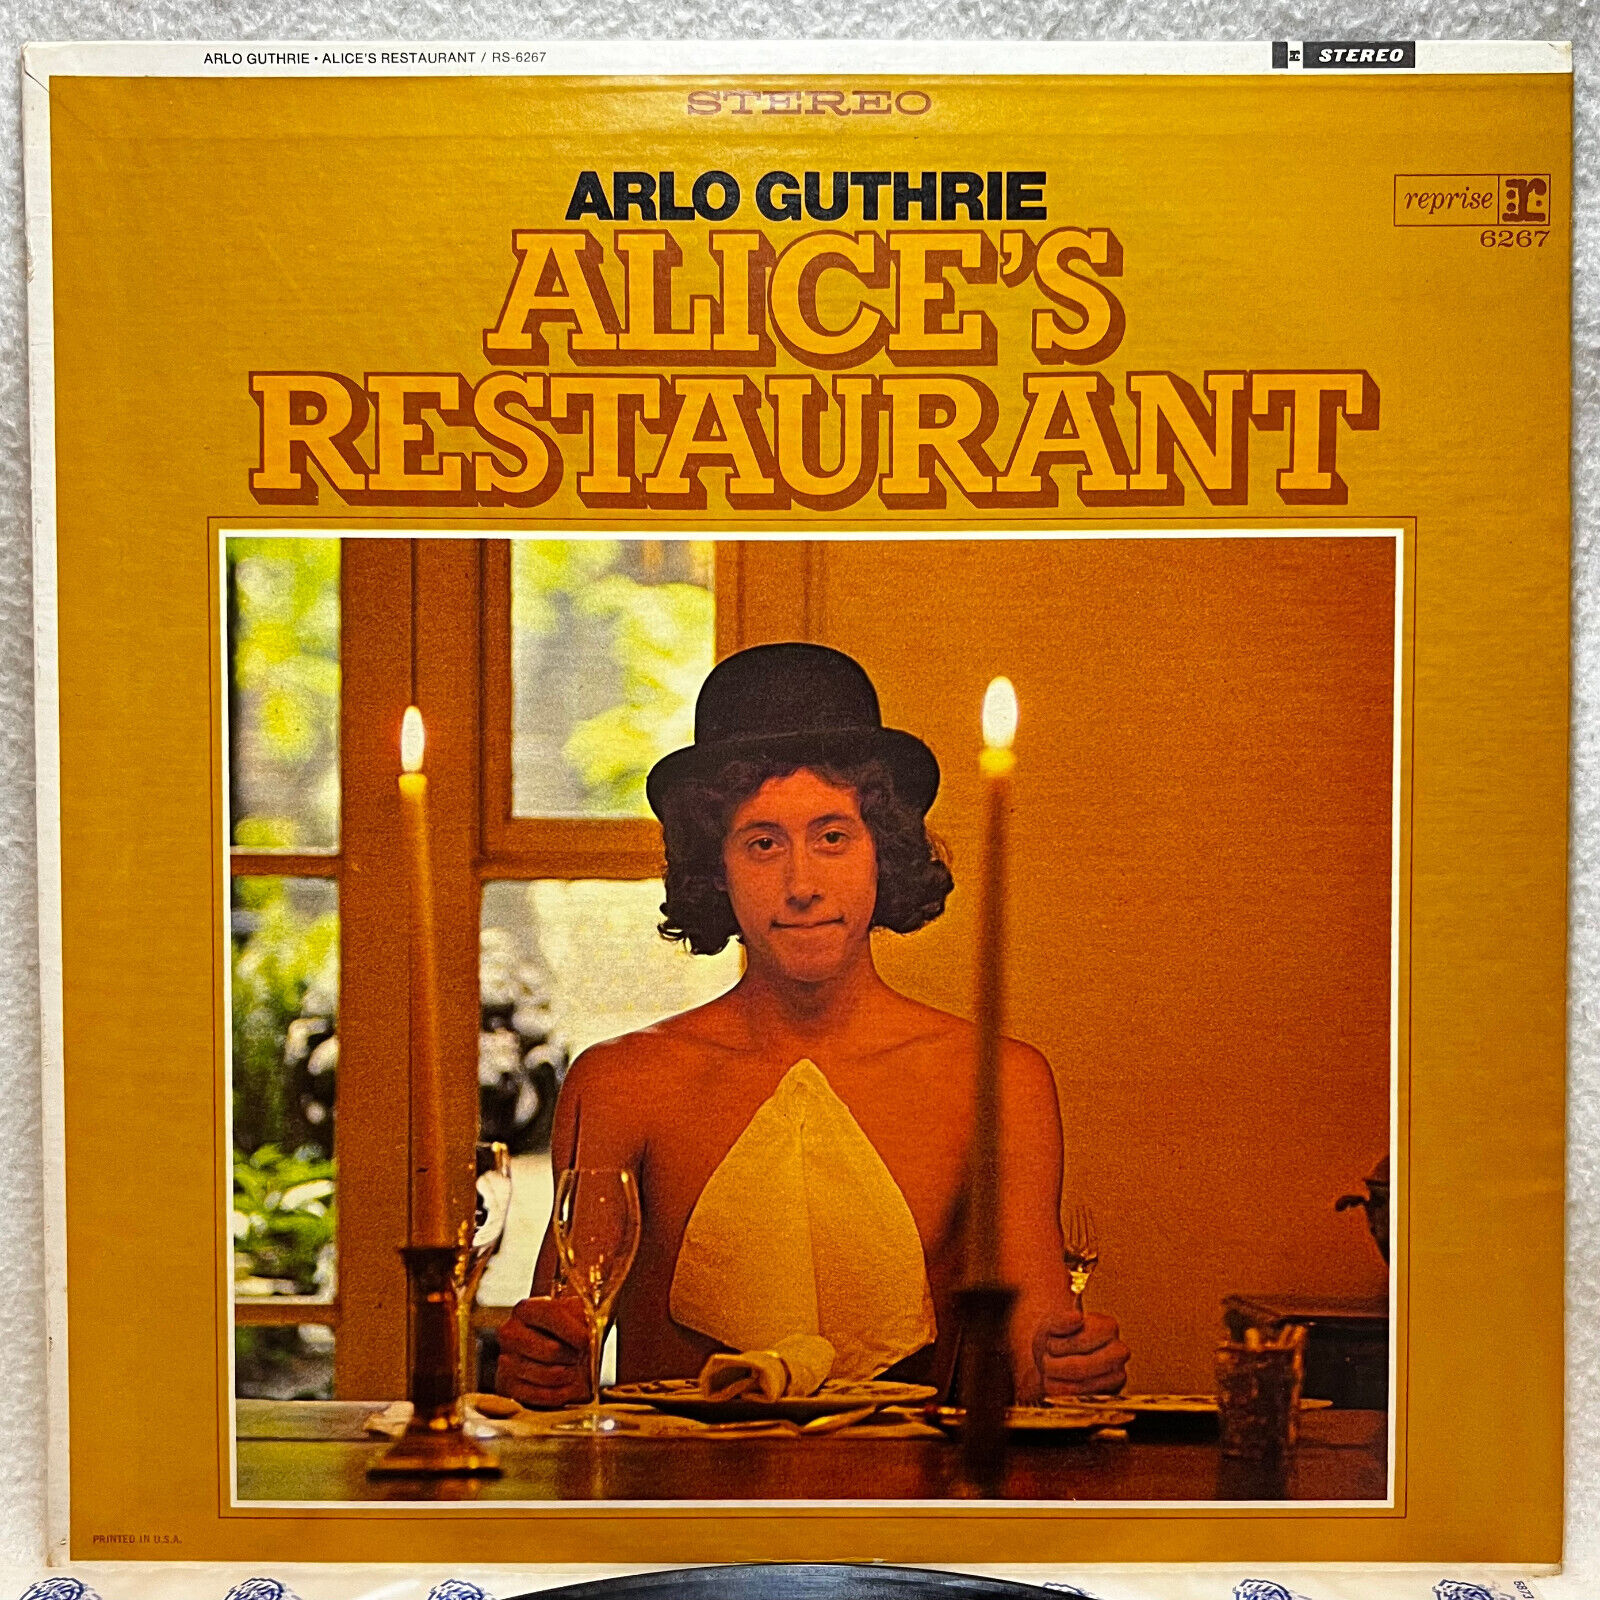 Arlo Guthrie – Alice's Restaurant (Reprise RS 6261) VG+ LP Folk Rock - 1967